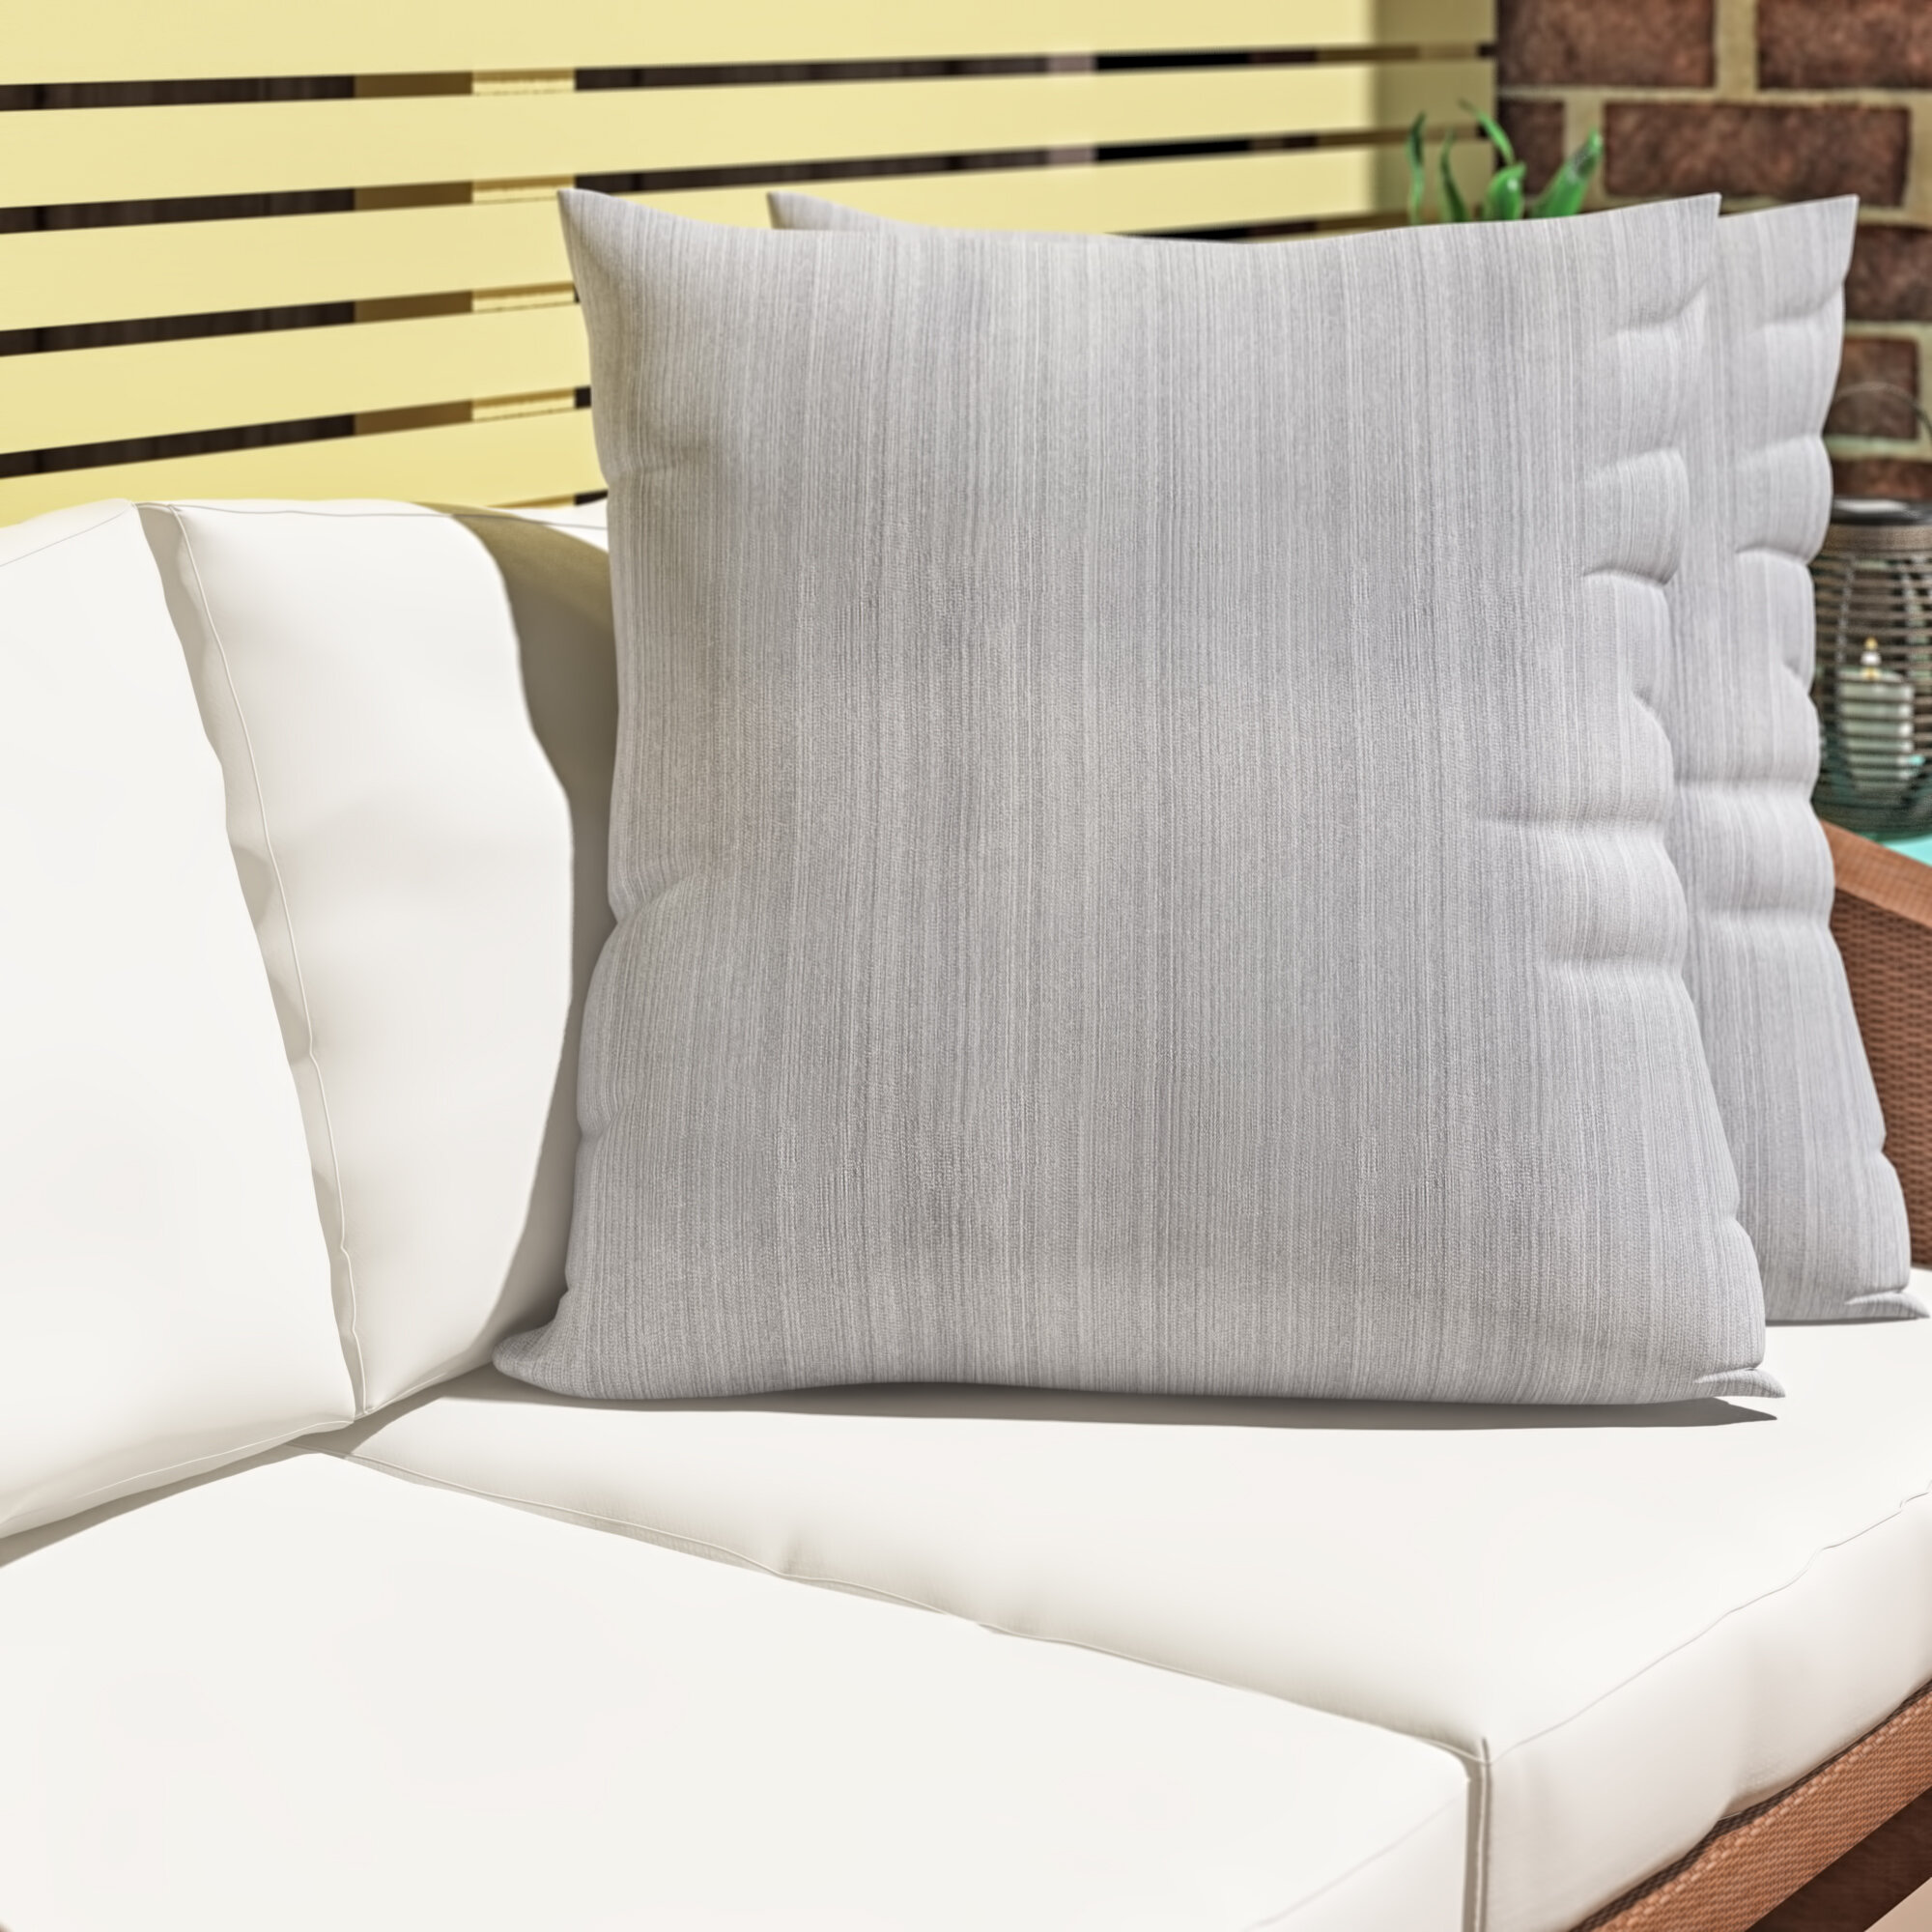 Sol 72 Outdoor Merseyside Outdoor Striped Throw Pillow Reviews